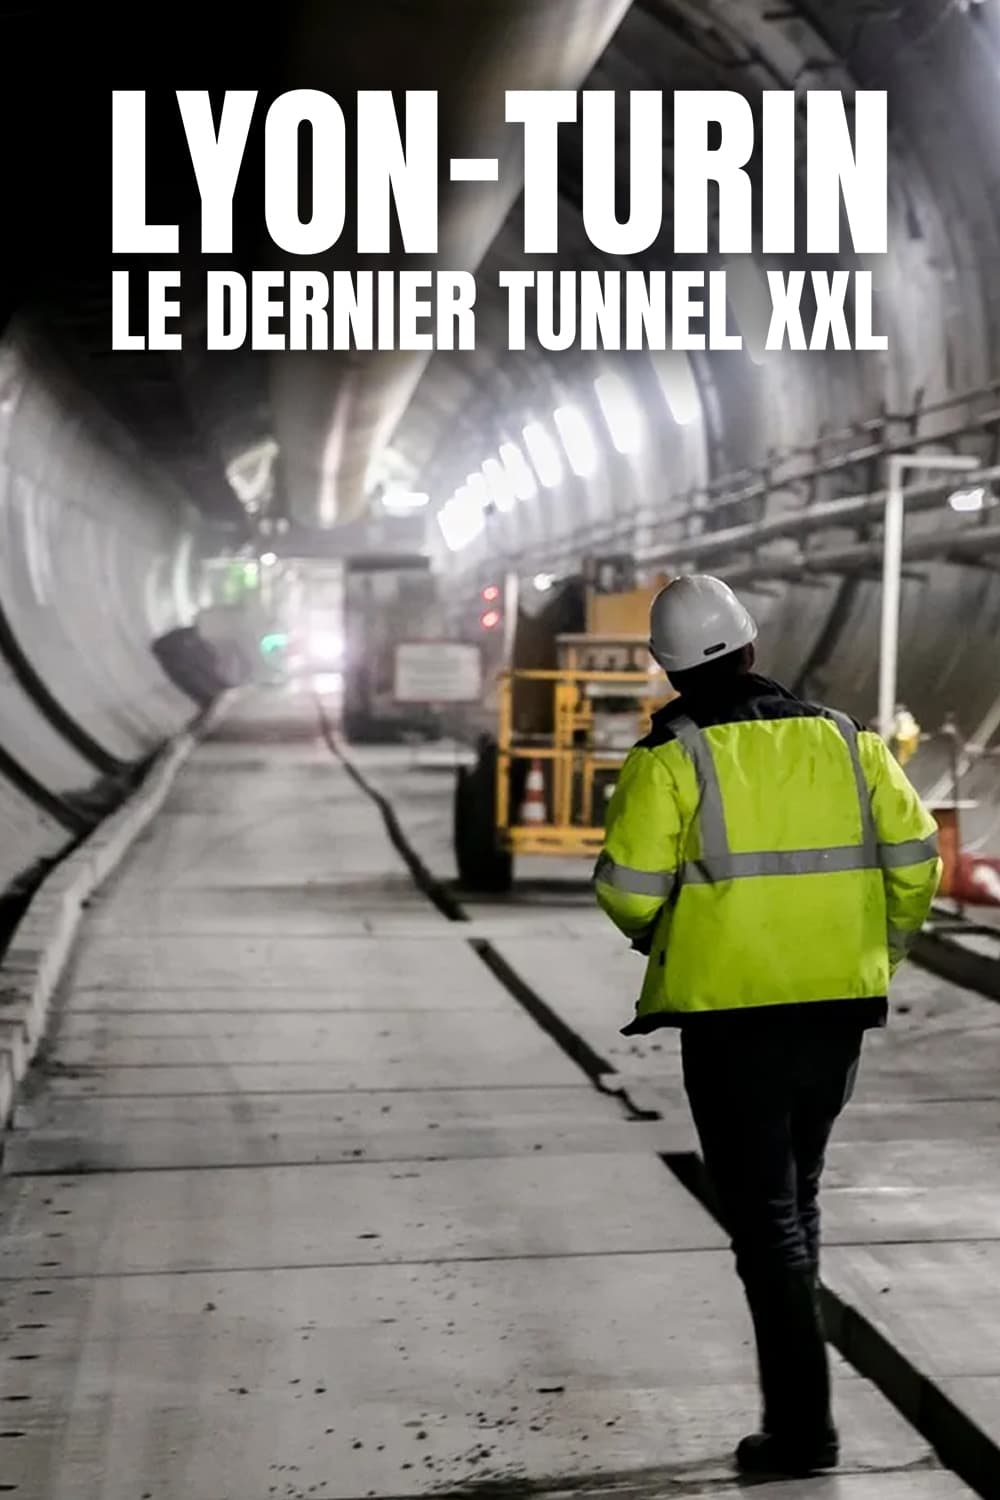 Lyon-Turin : Le Dernier Tunnel XXL